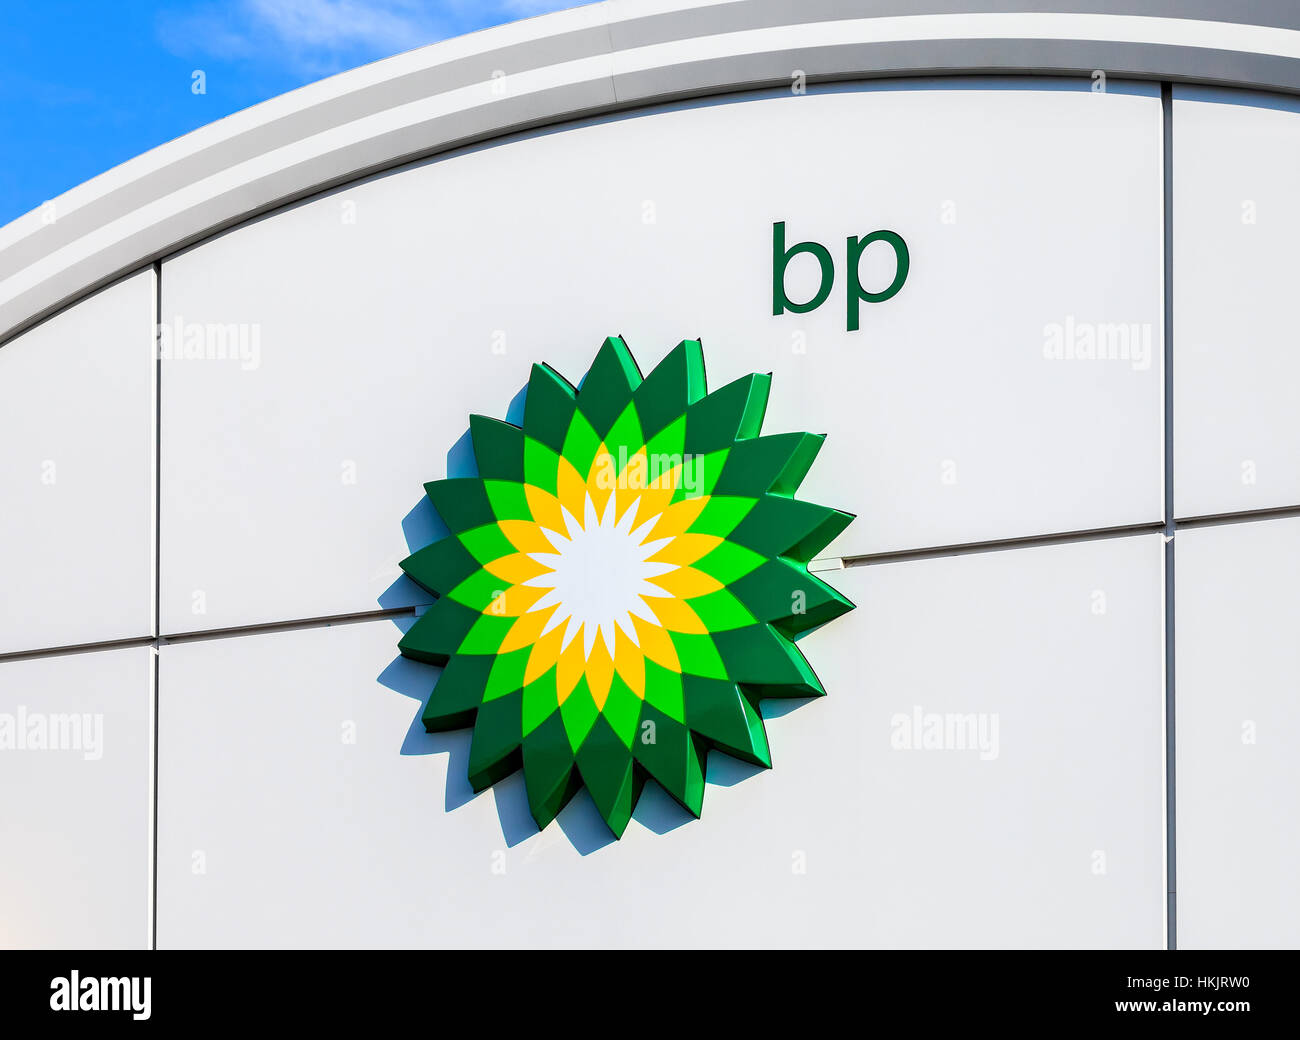 BP - British Petroleum petrol station logo over blue sky. British Petroleum is a British multinational oil and gas com Stock Photo